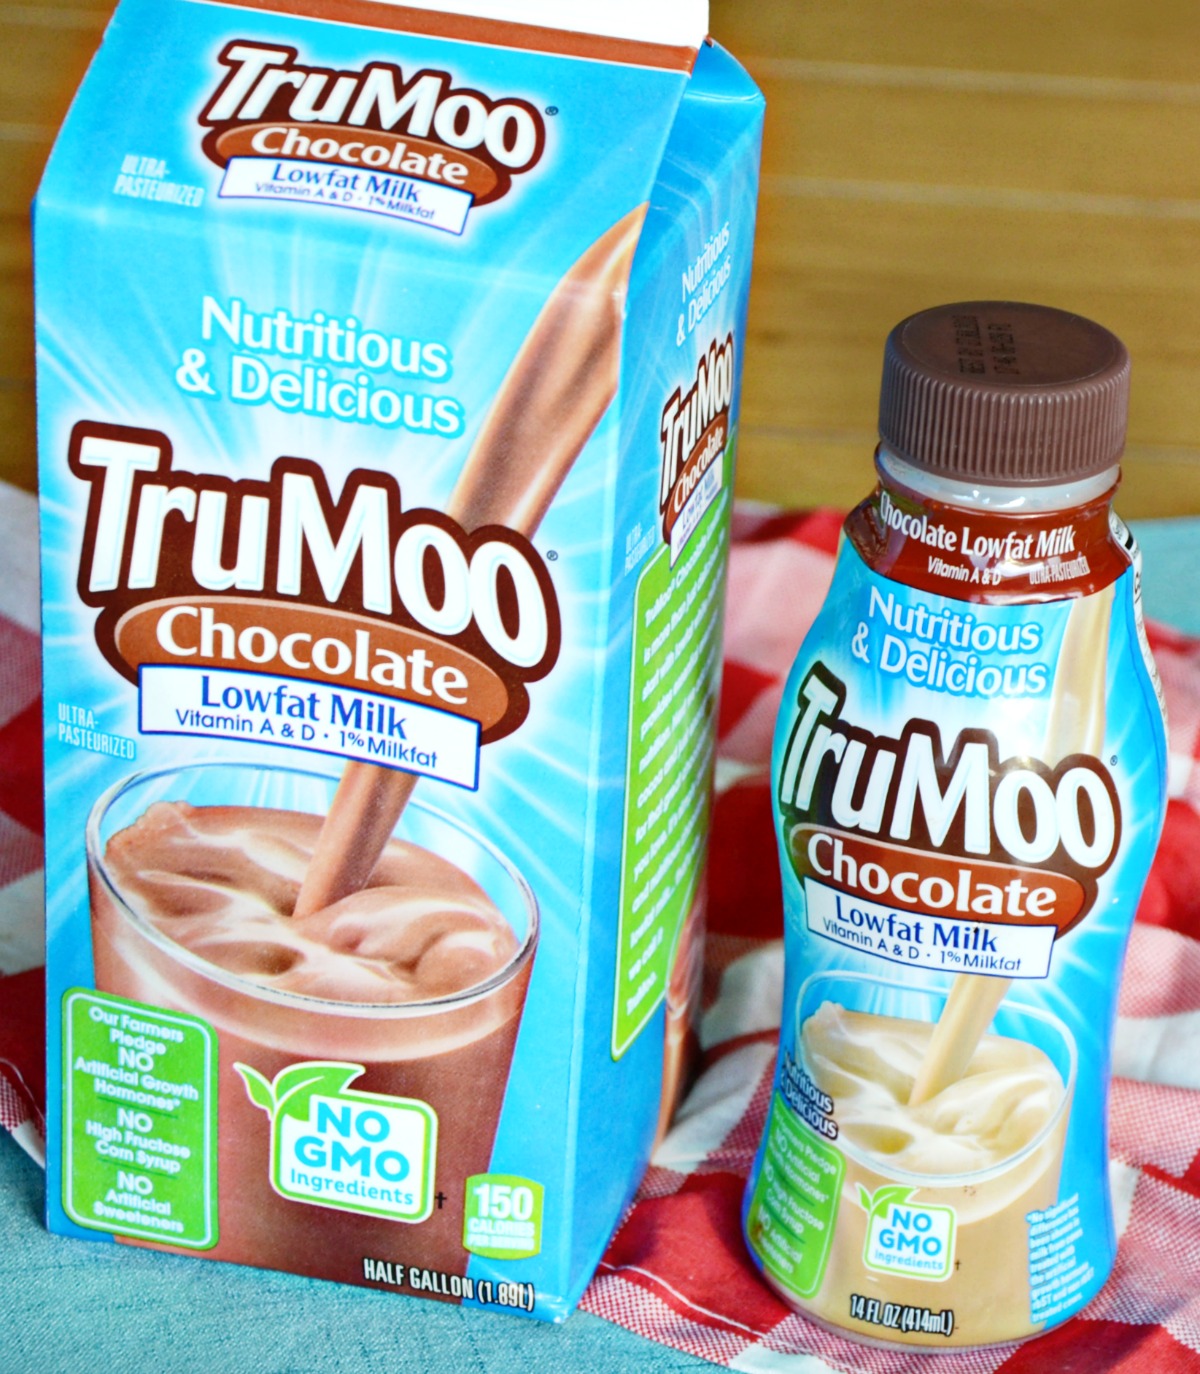 TruMoo delivers "Tru taste, Tru nutrition and Tru fun" for a nutritious kids snack.